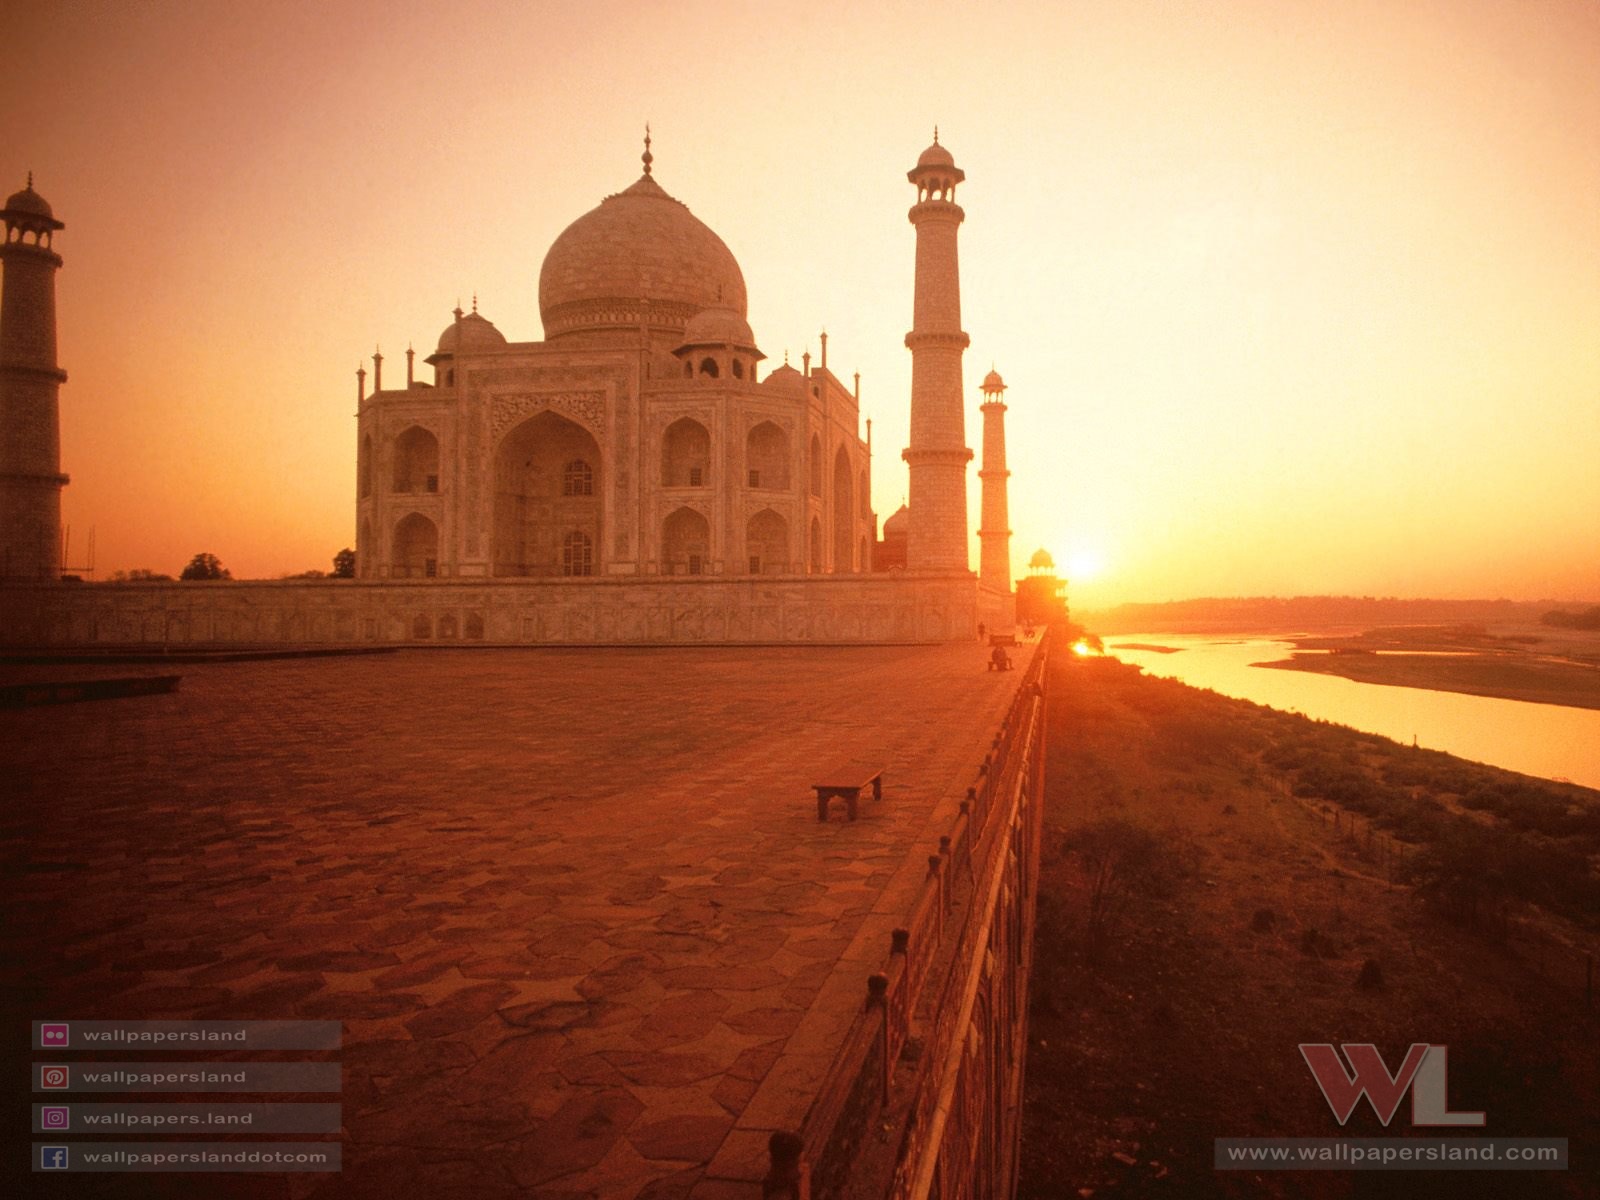 The Taj Mahal at Sunset, India